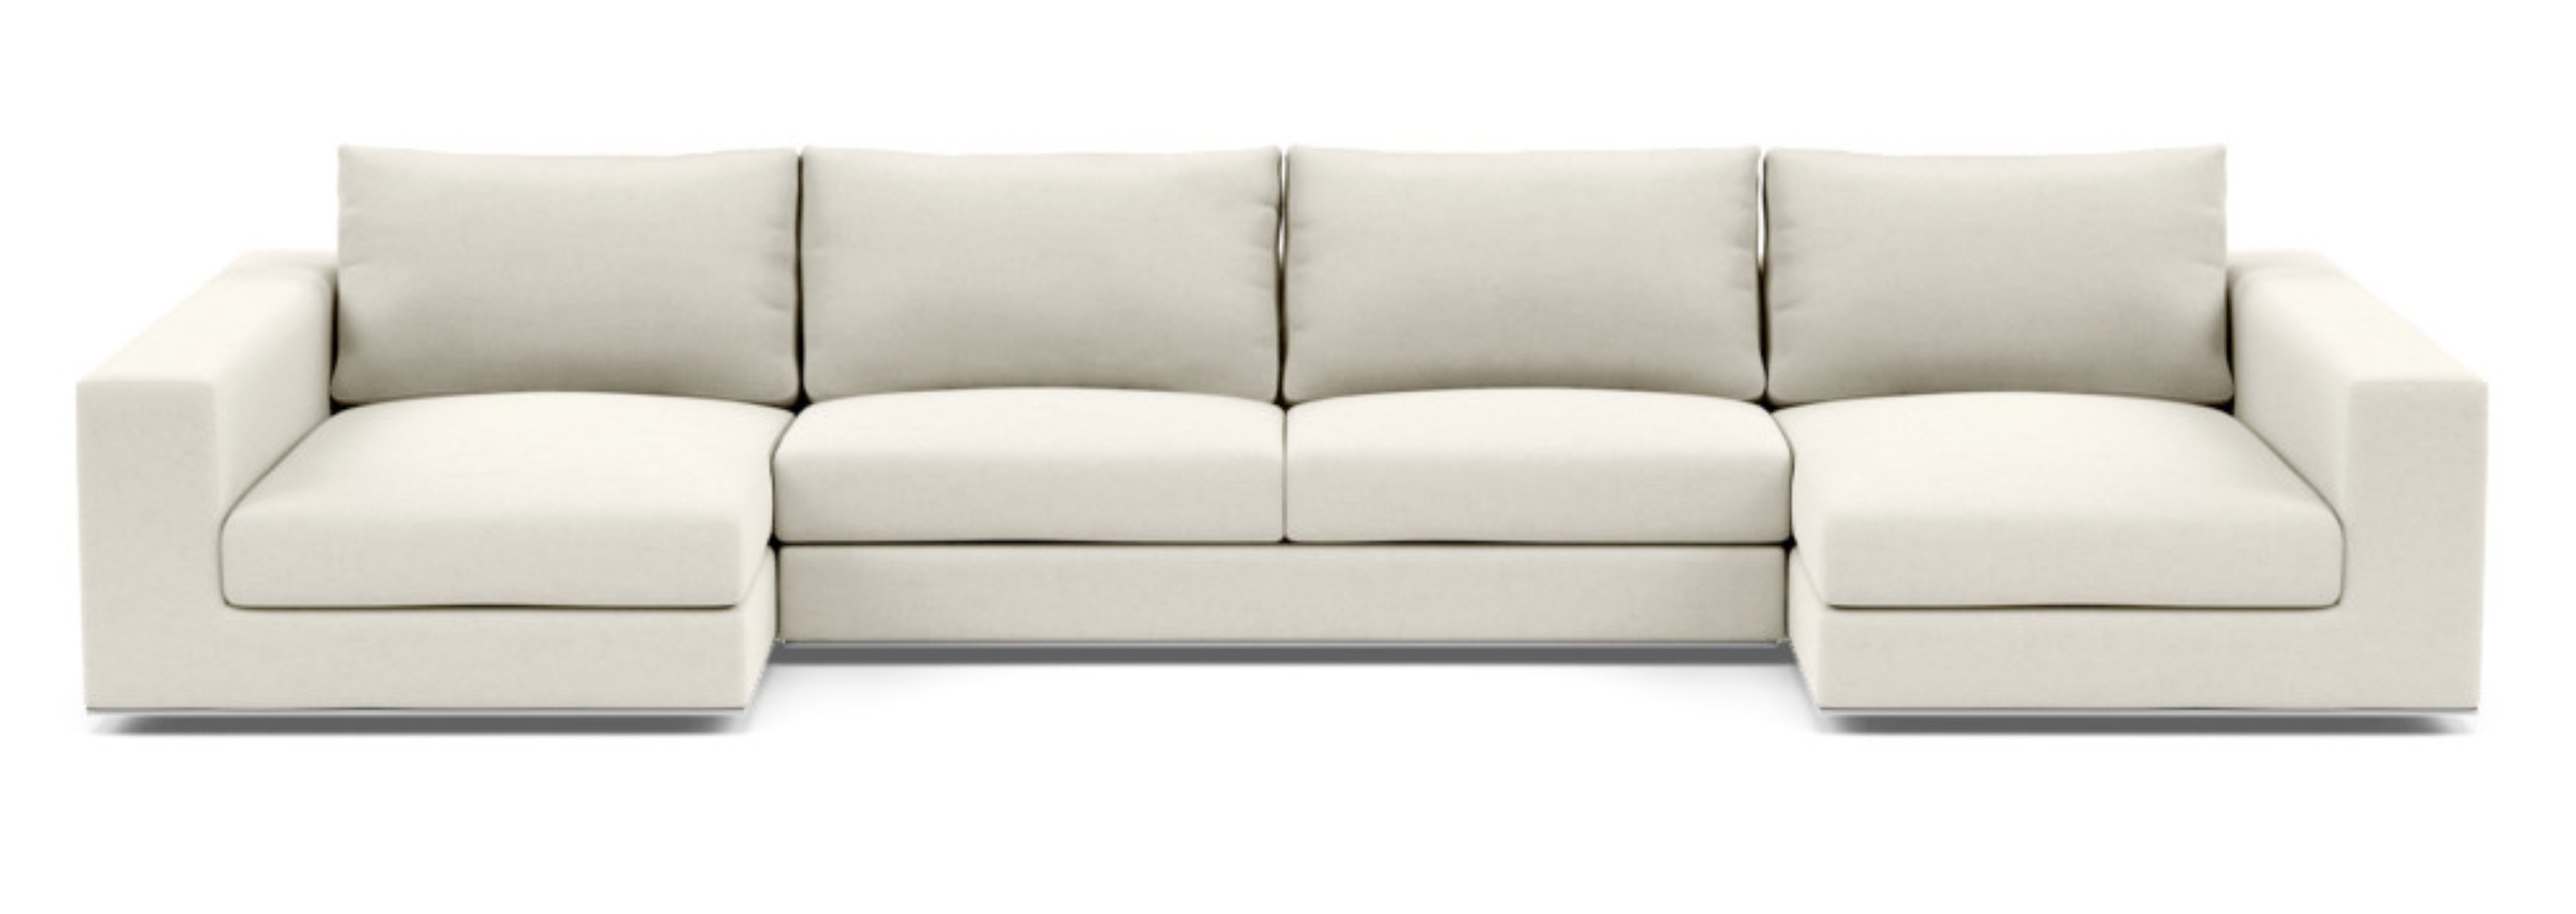 WALTERS U-Sectional Sofa in Chalk Heathered Weave - Image 0